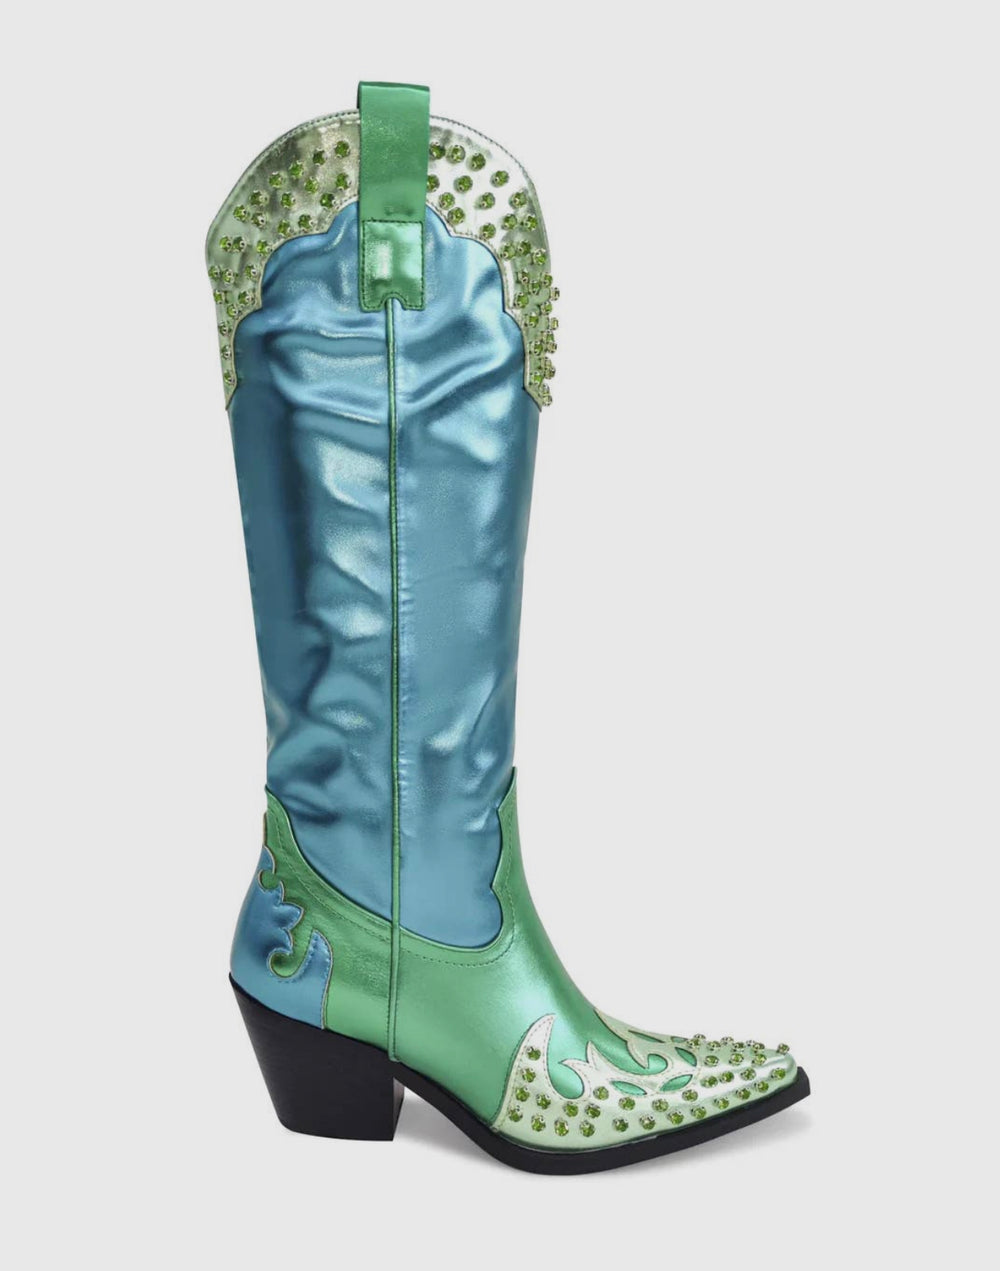 $125 Blue & Green Cowboy Boots